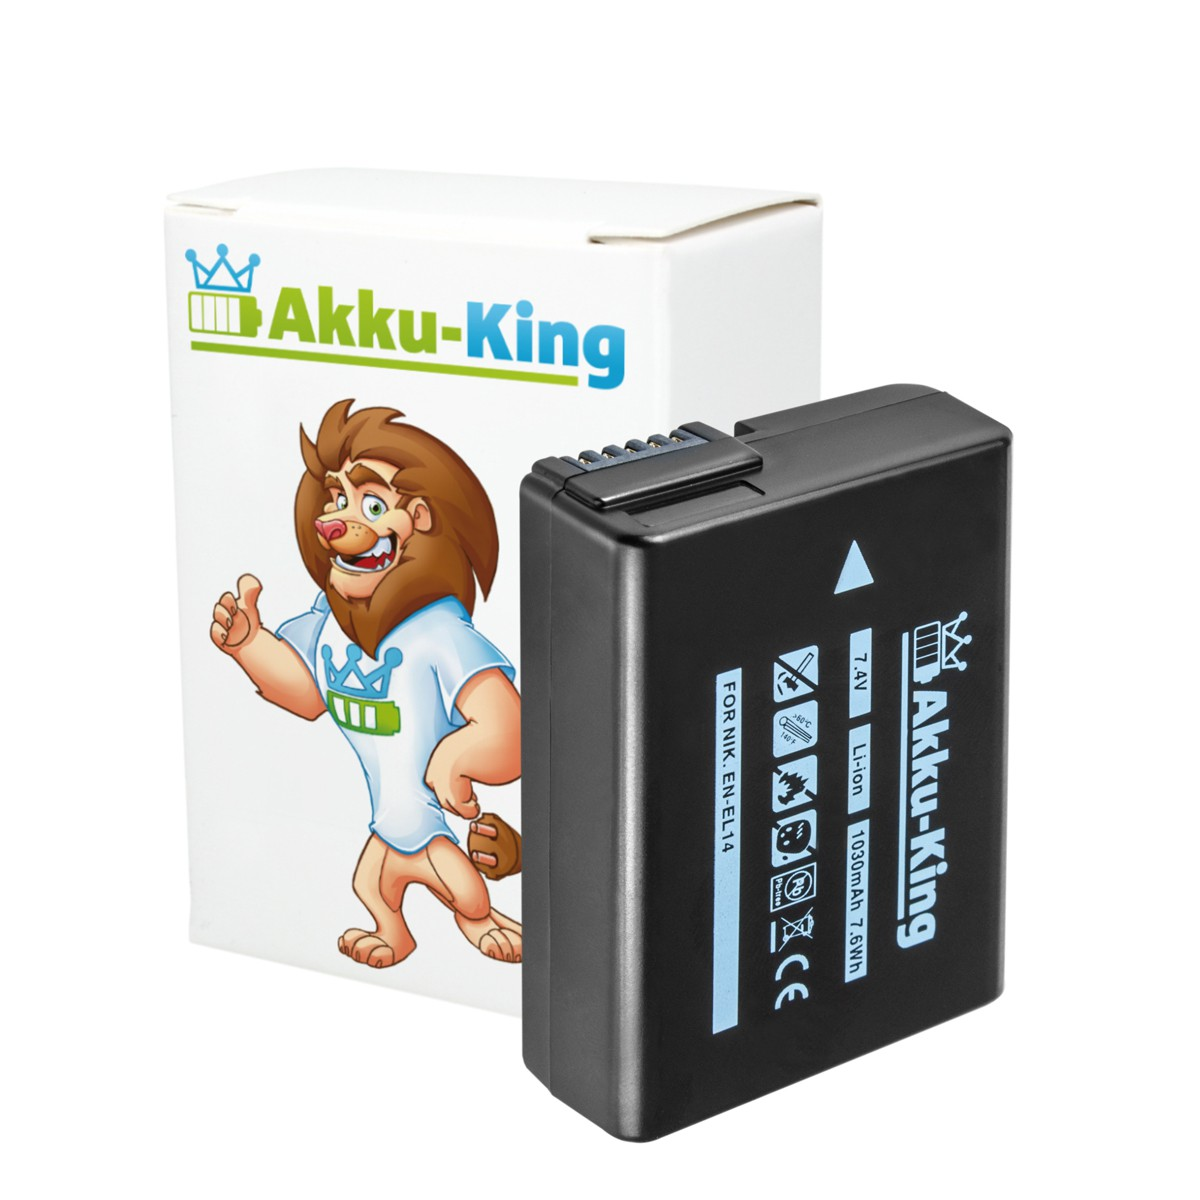 AKKU-KING Akku kompatibel mit Kamera-Akku, Li-Ion 1030mAh EN-EL14 Nikon Volt, 7.4